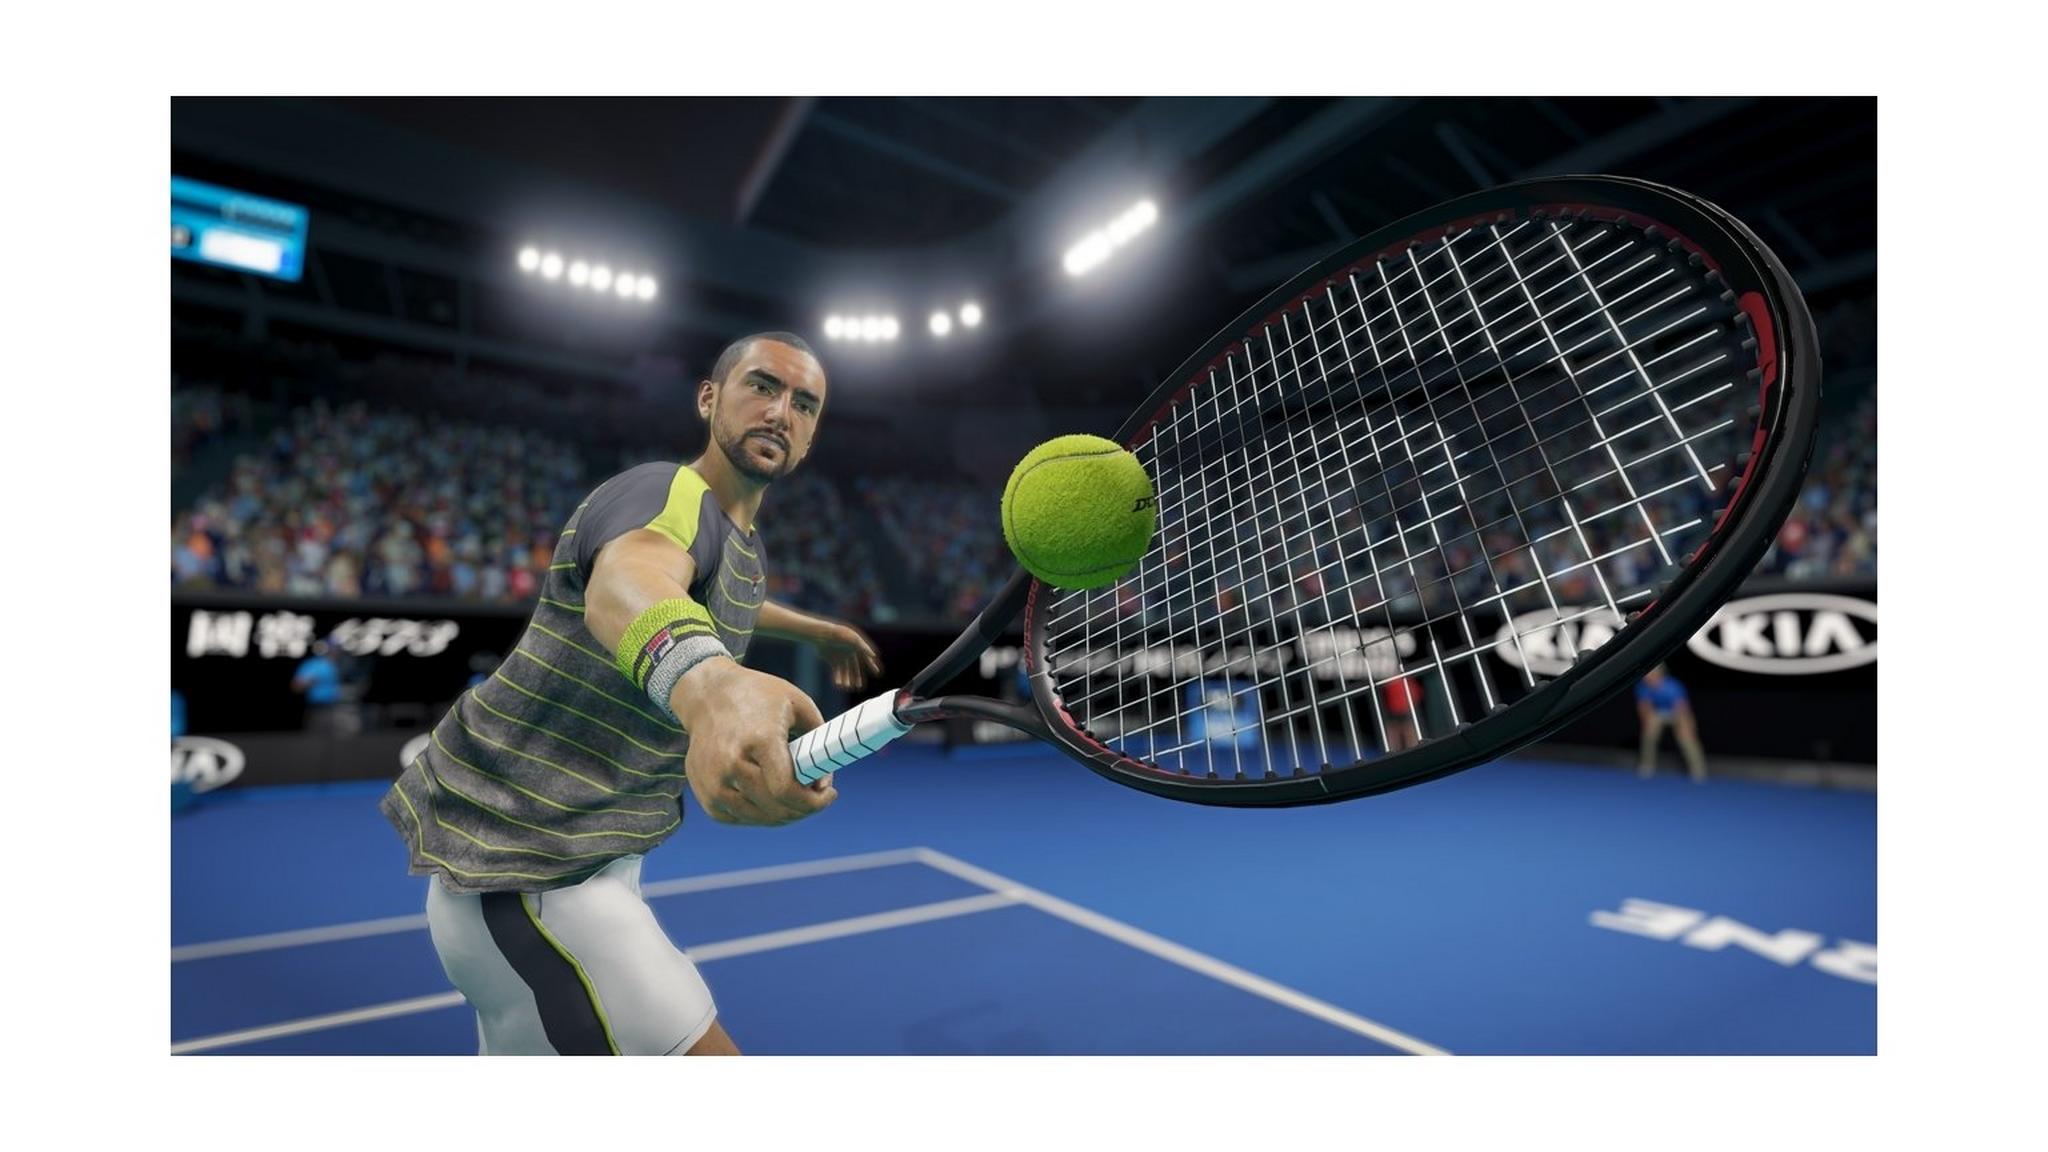 AO Tennis 2 - Nintendo Switch Game